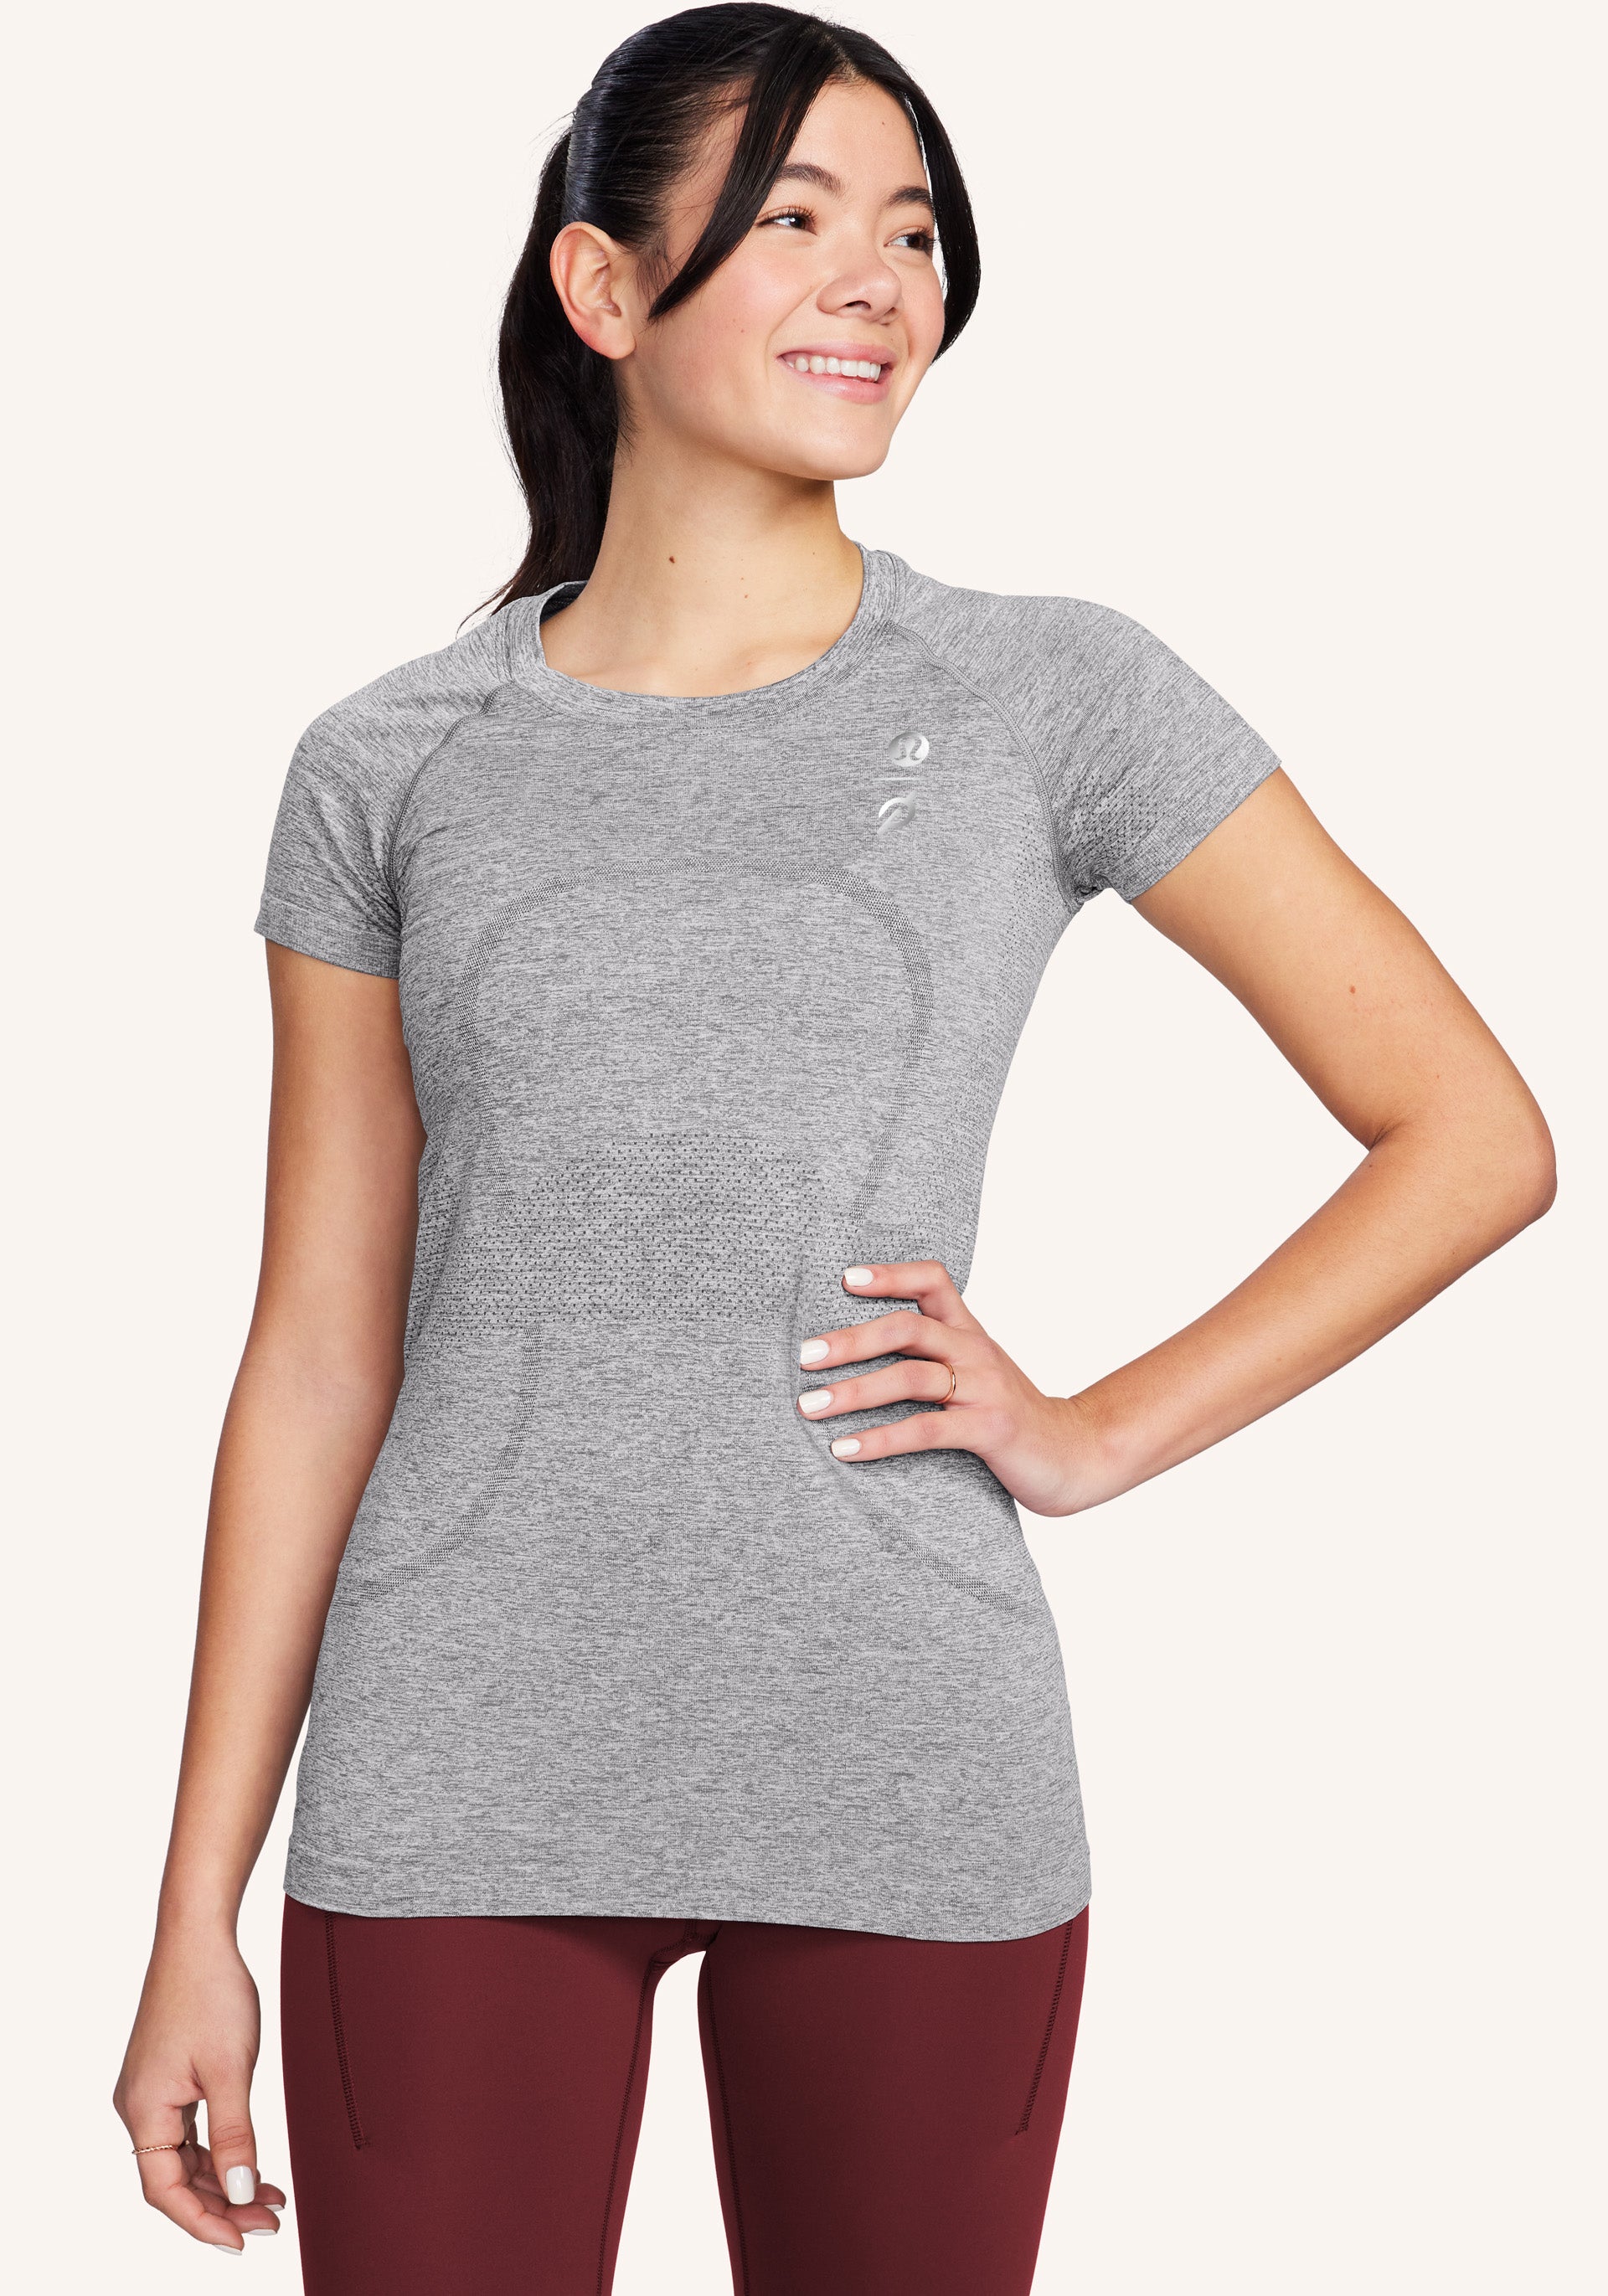 Lululemon Swiftly Tech Short-Sleeve Shirt 2.0 *Race Length